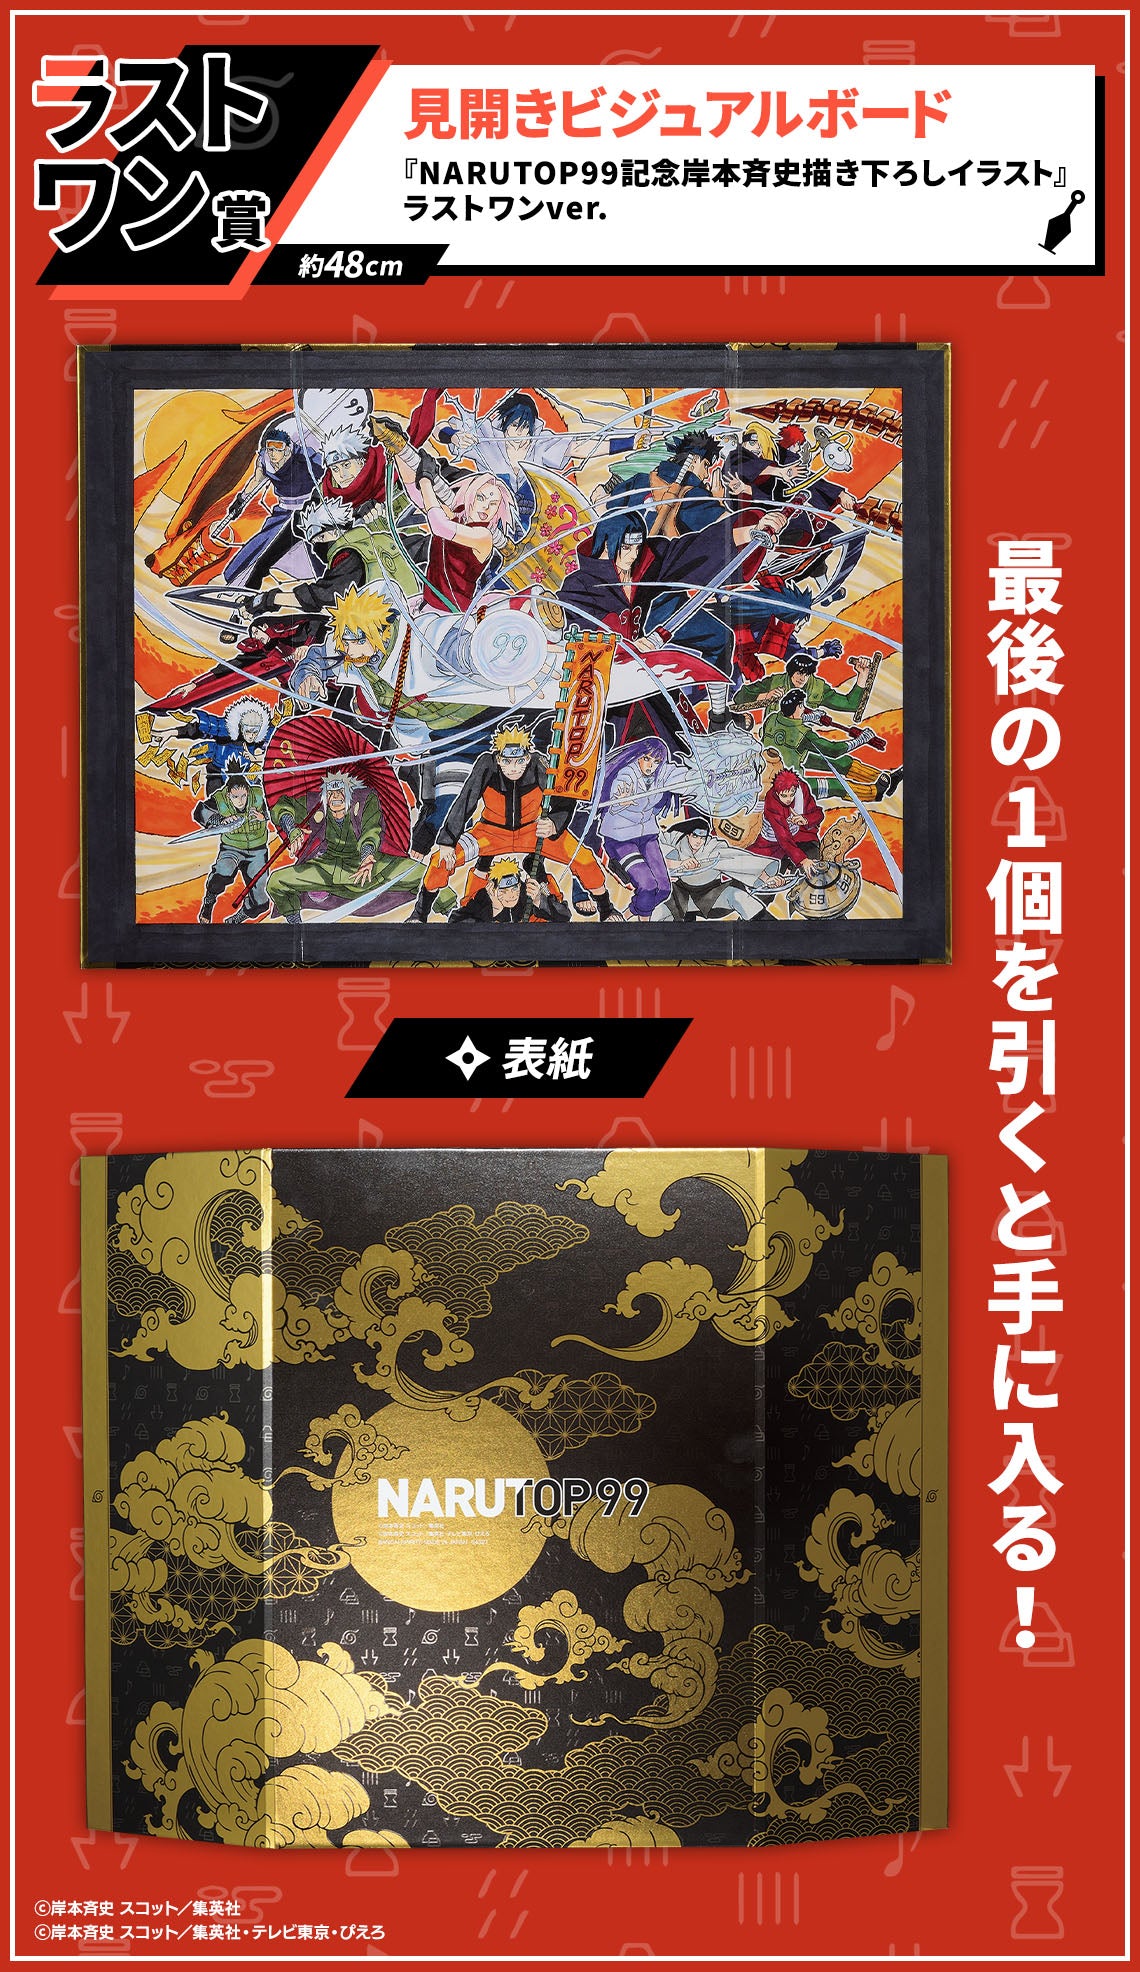 NARUTO ICHIBAN KUJI - NARUTOP99 - GORGEOUS SHINOBI EMAKI (LAST ONE) VISUAL BOARD